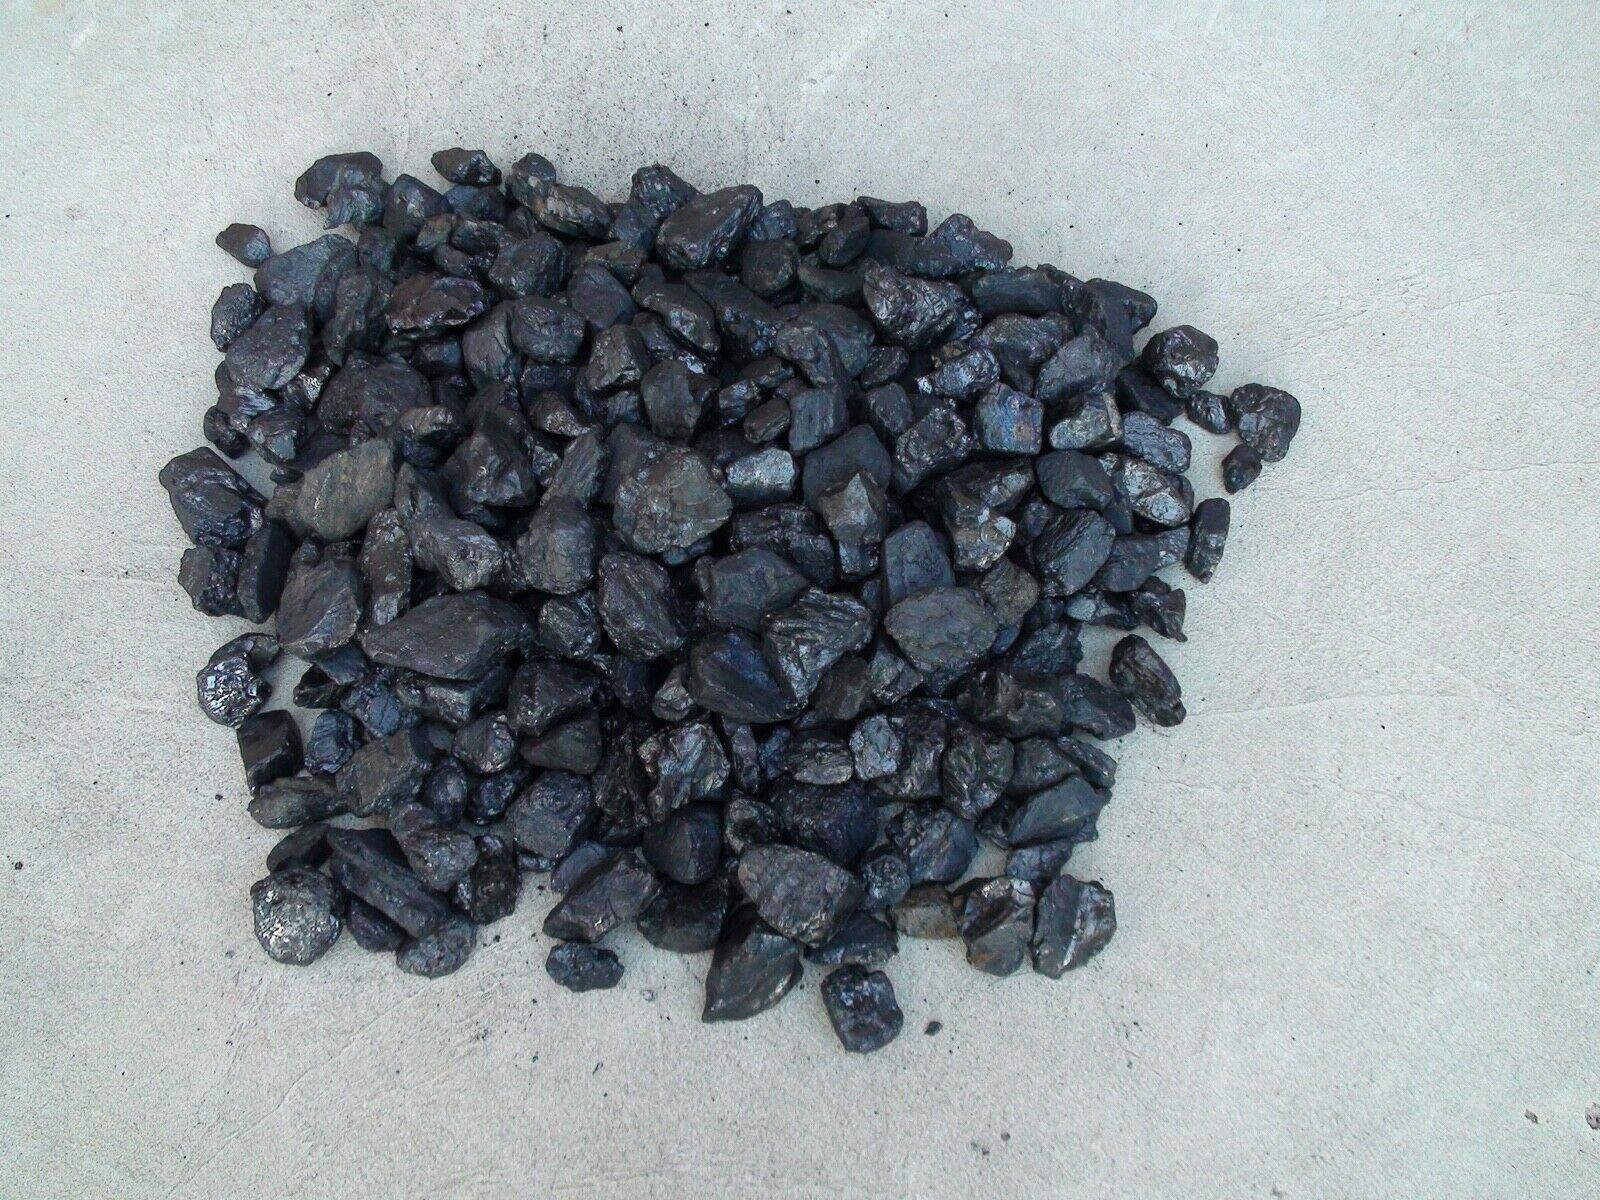 Anthracite Nut Coal 15 lbs  Blacksmith Knifemaking Teacher Aid Christmas